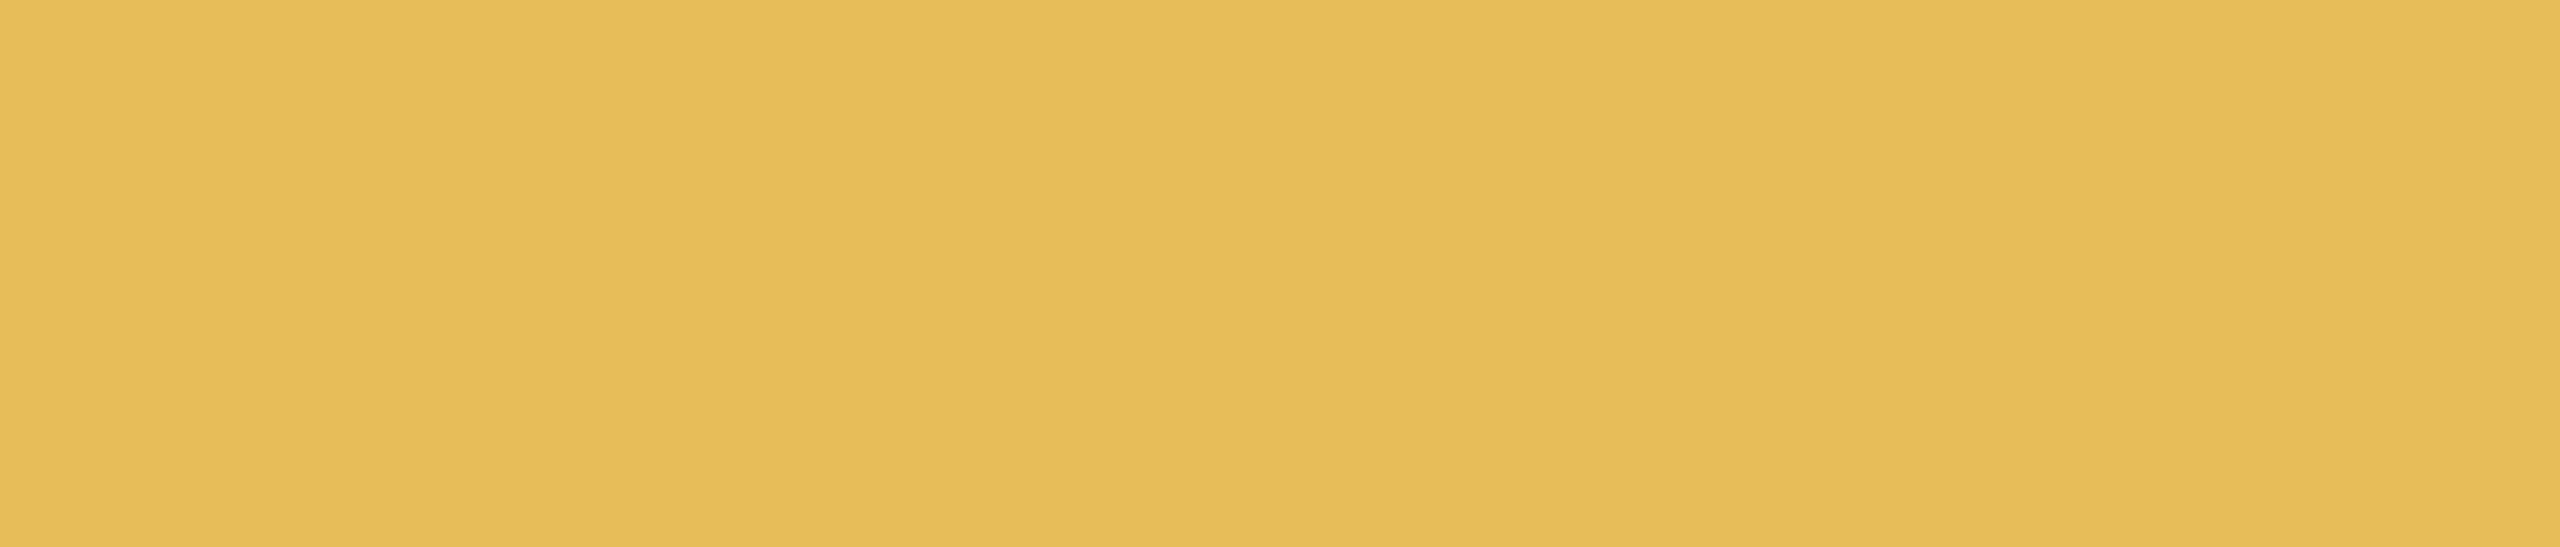 pm205 sandy yellow 1